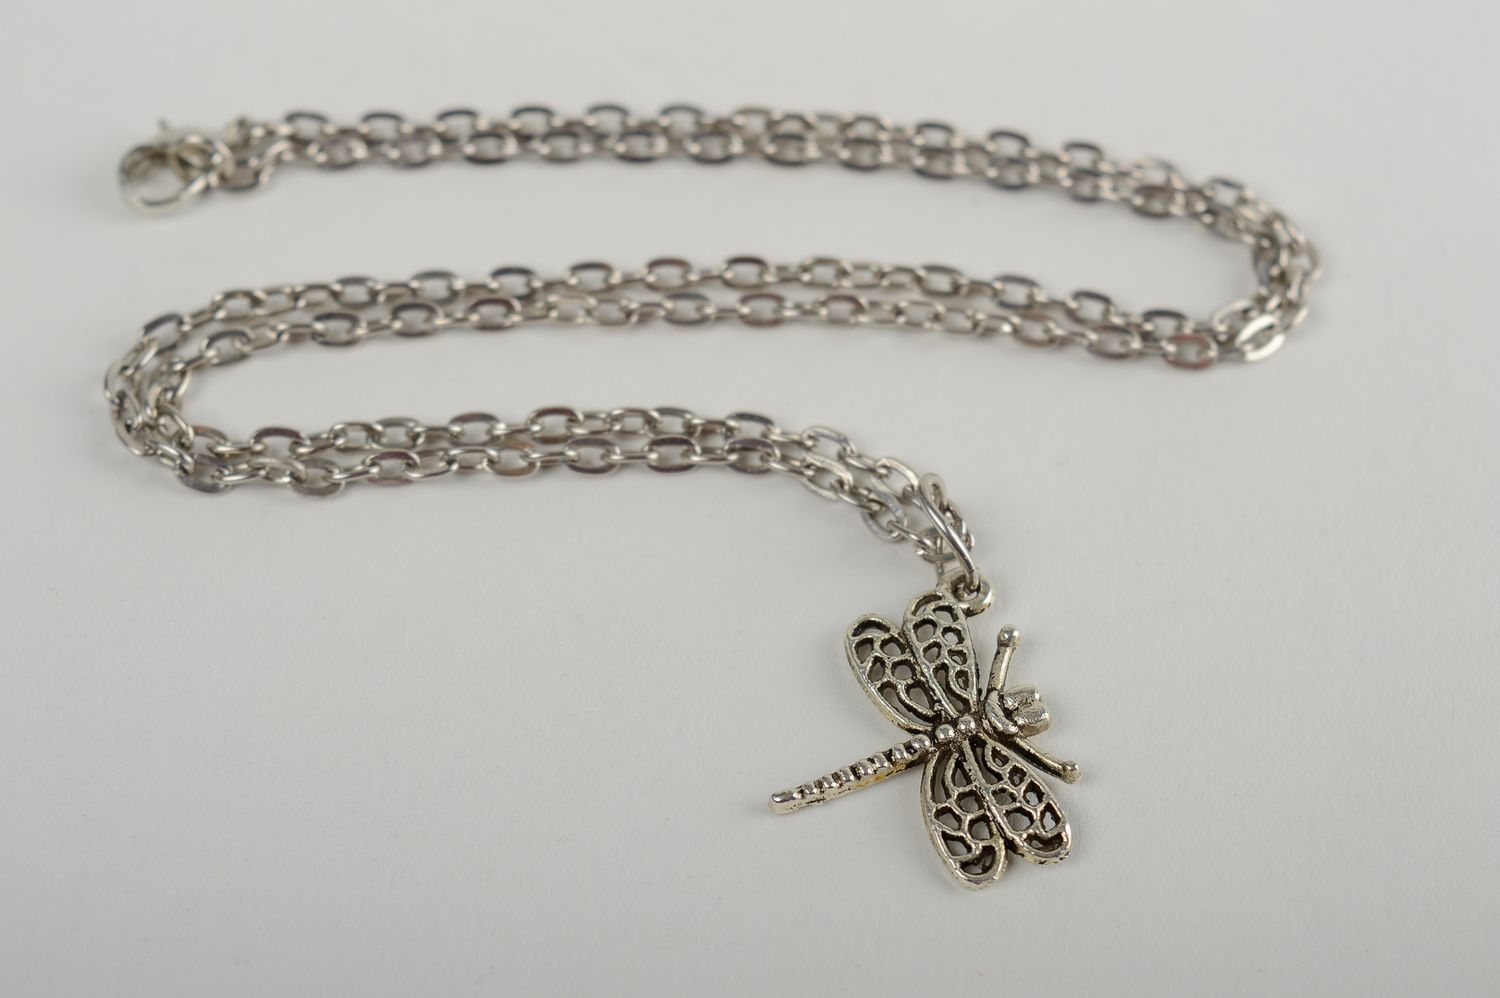 Handmade vintage pendant of chain metal pendant designer accessories for women photo 2